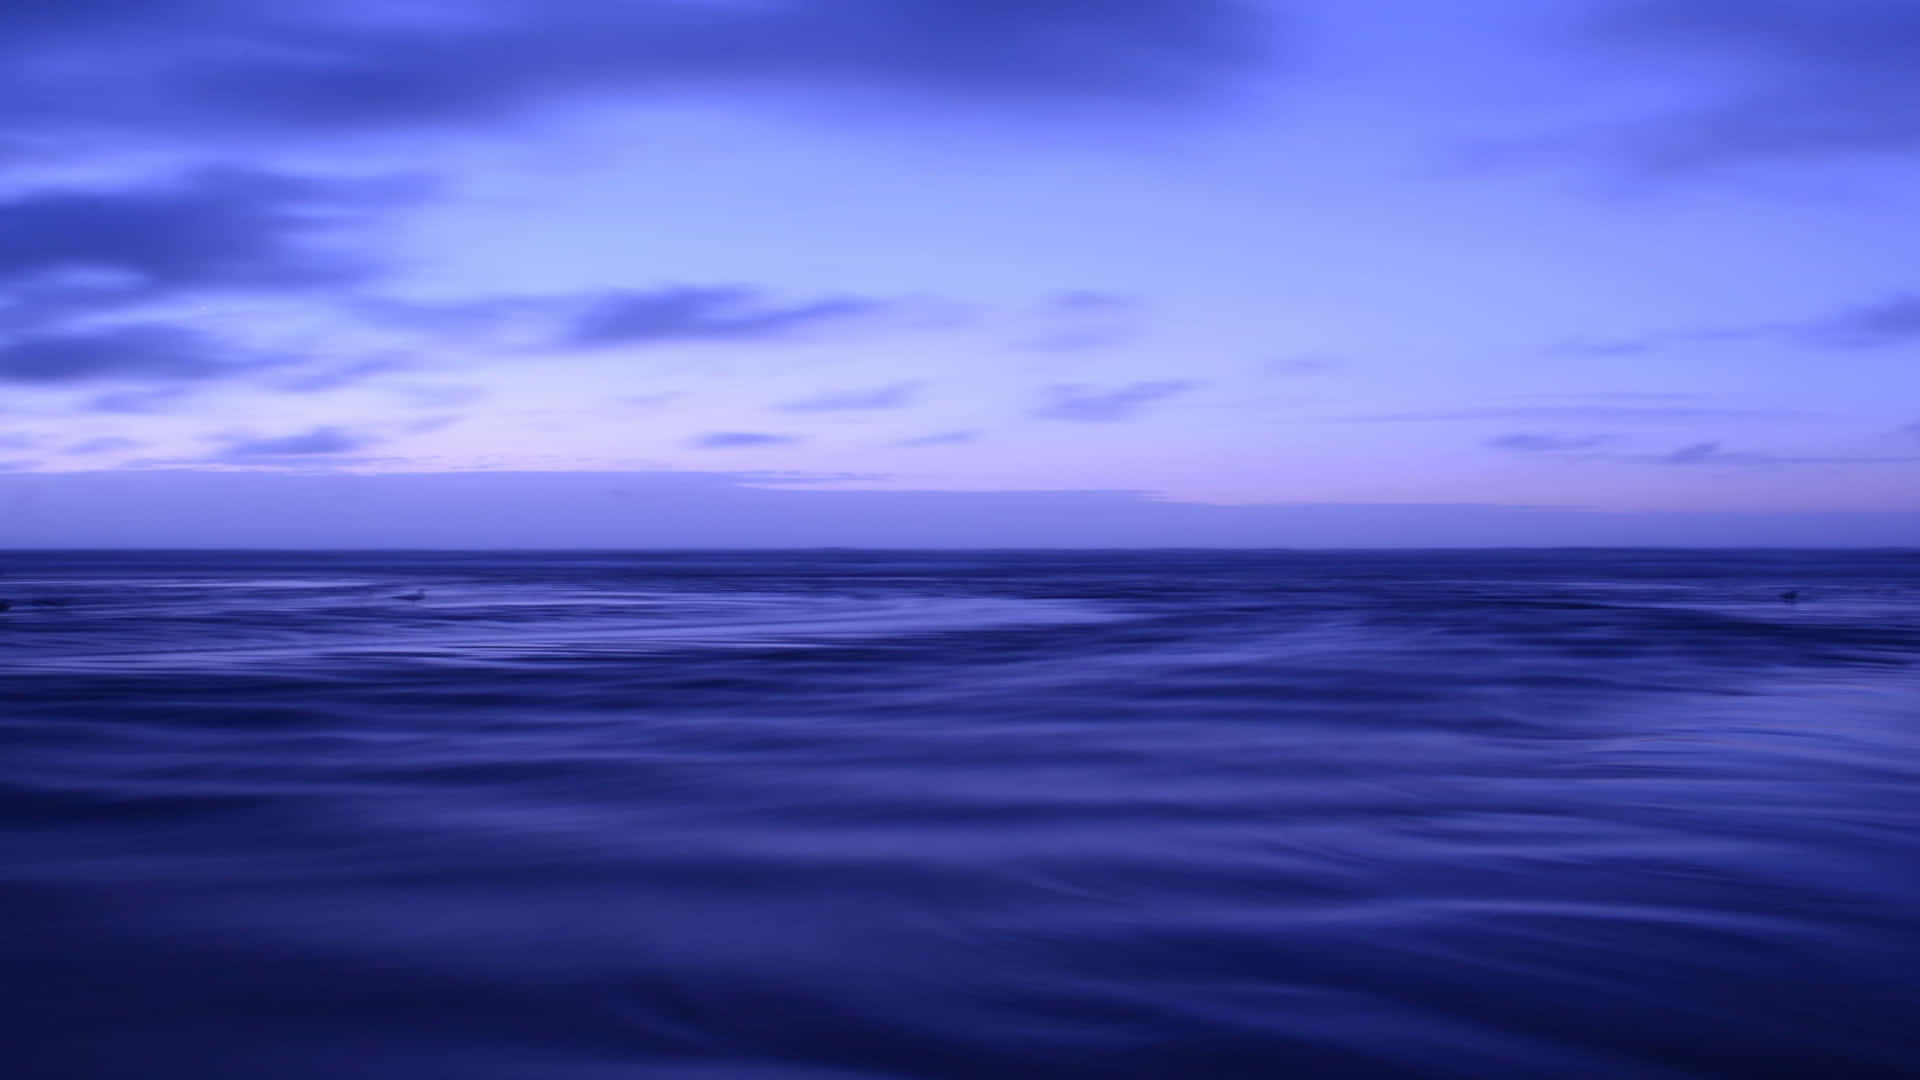 Free Ocean Blue Wallpaper Downloads, [400+] Ocean Blue Wallpapers for FREE  